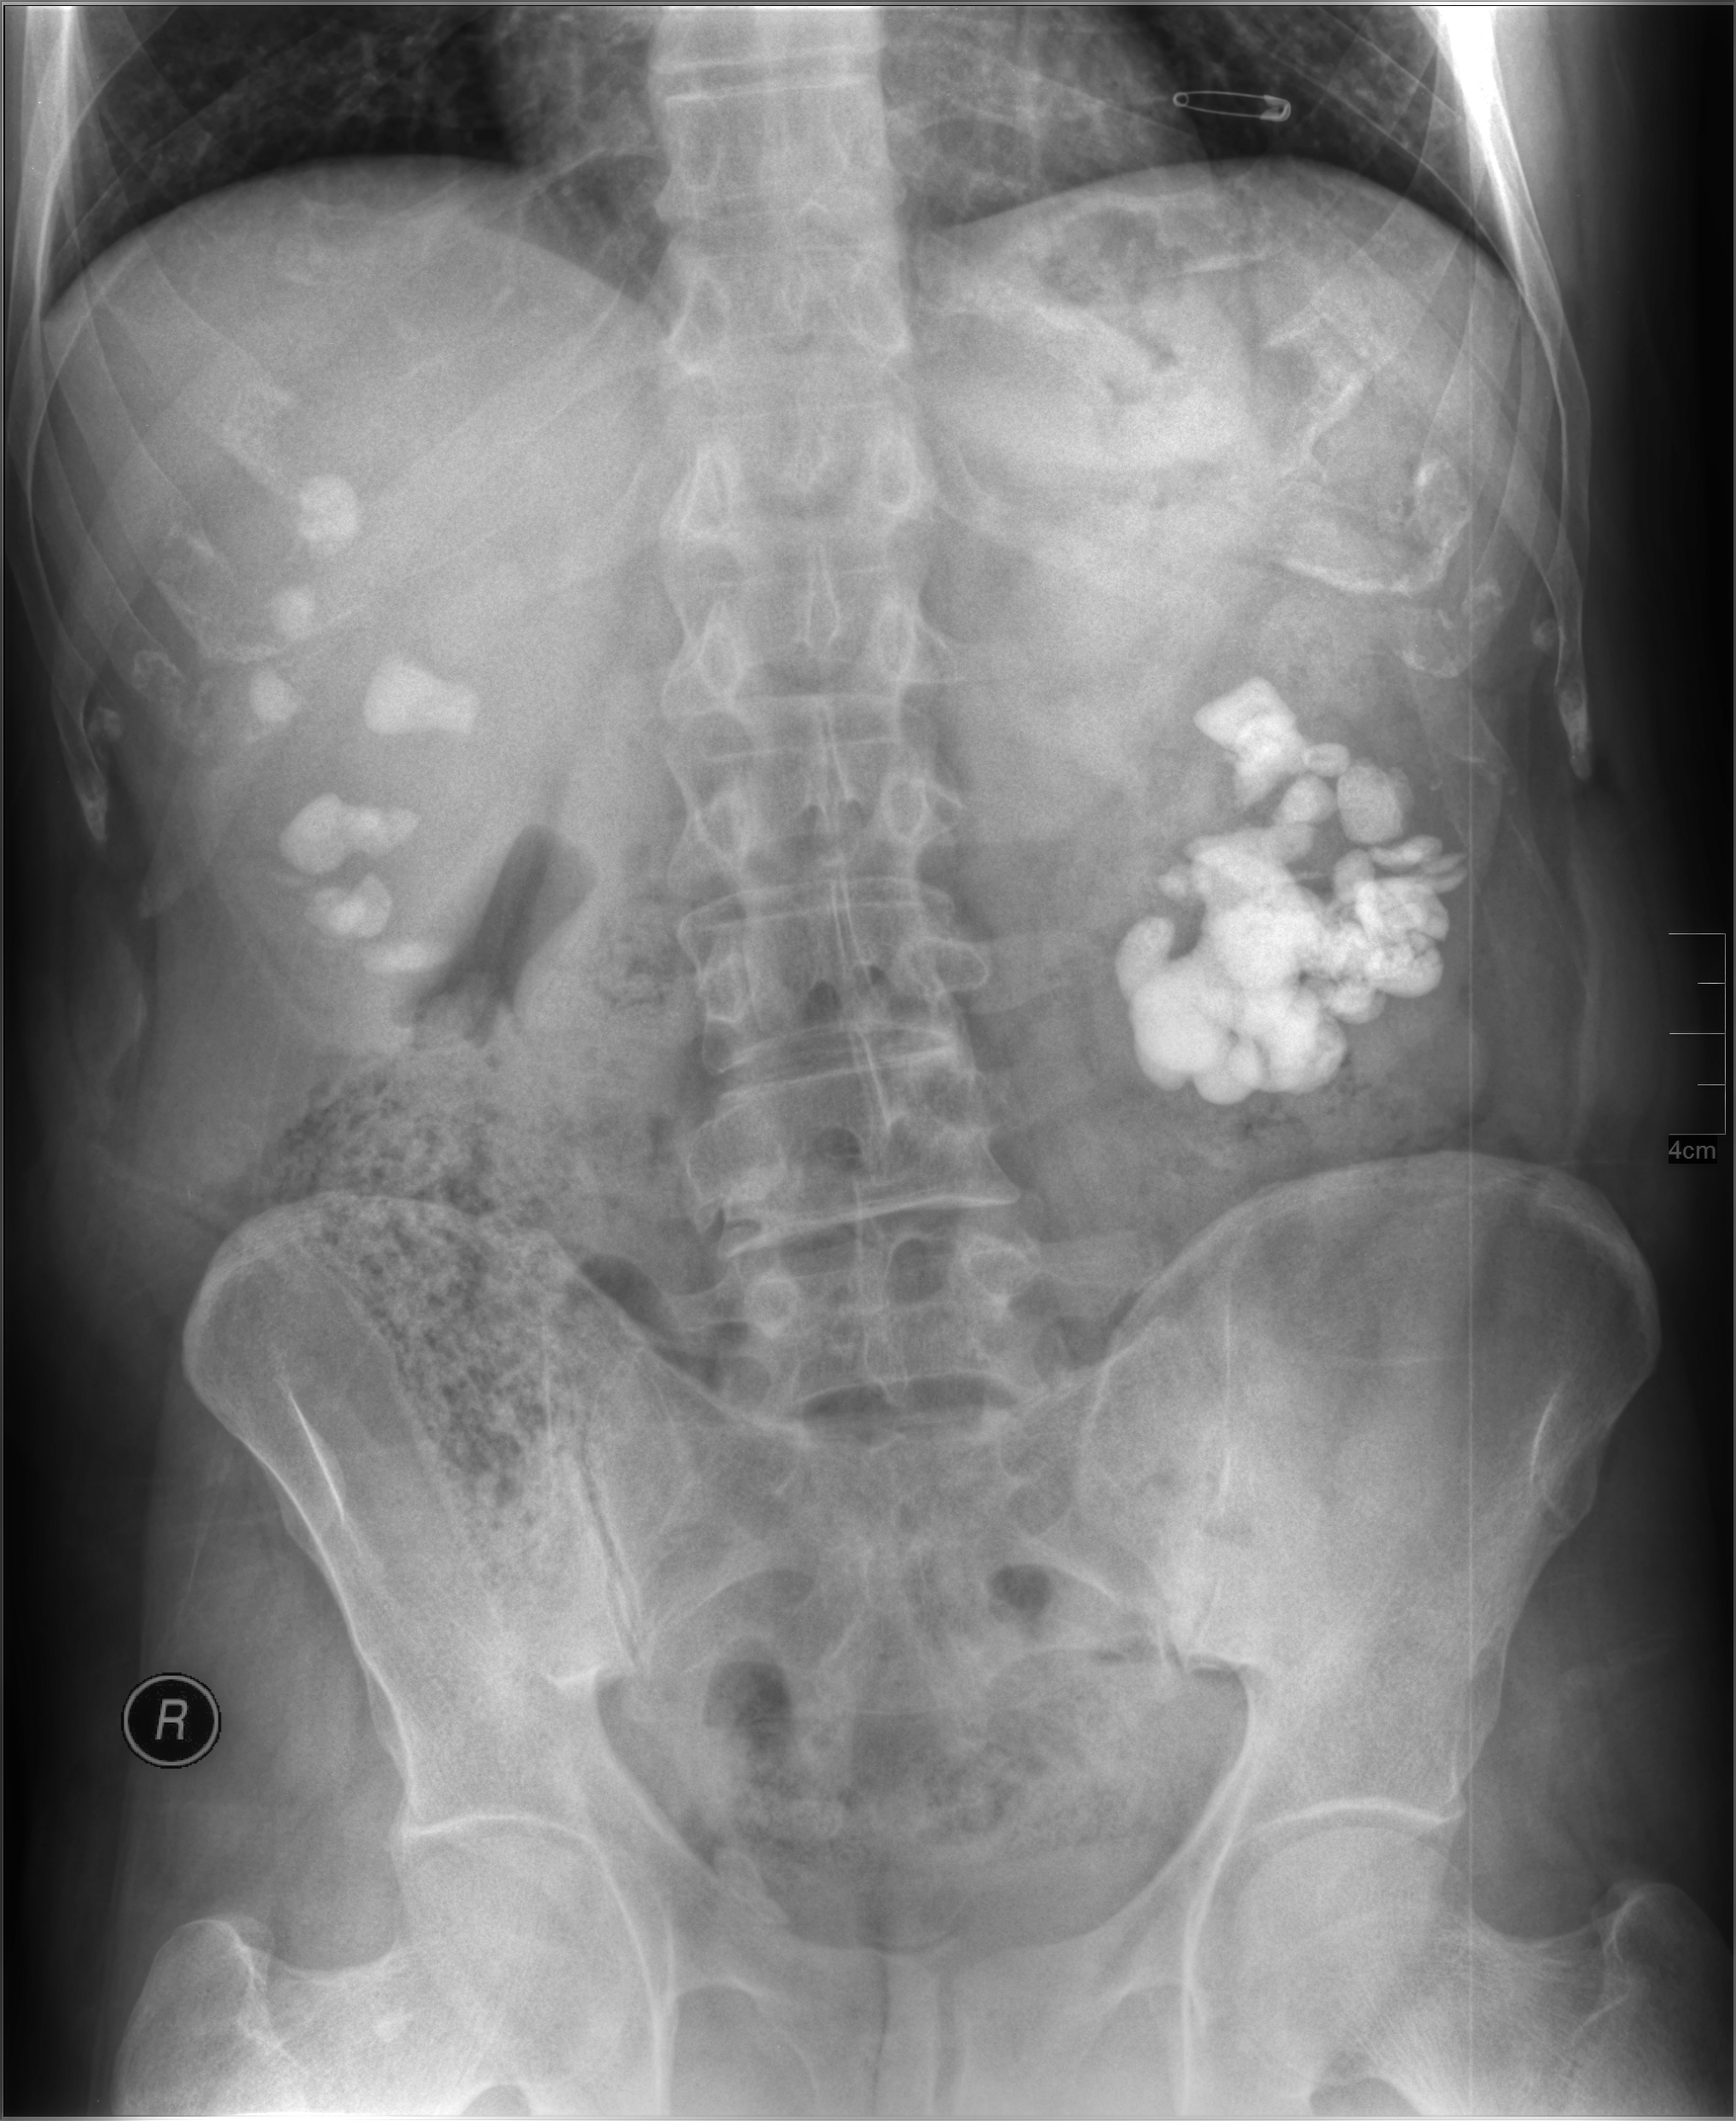 abdominal x ray presentation